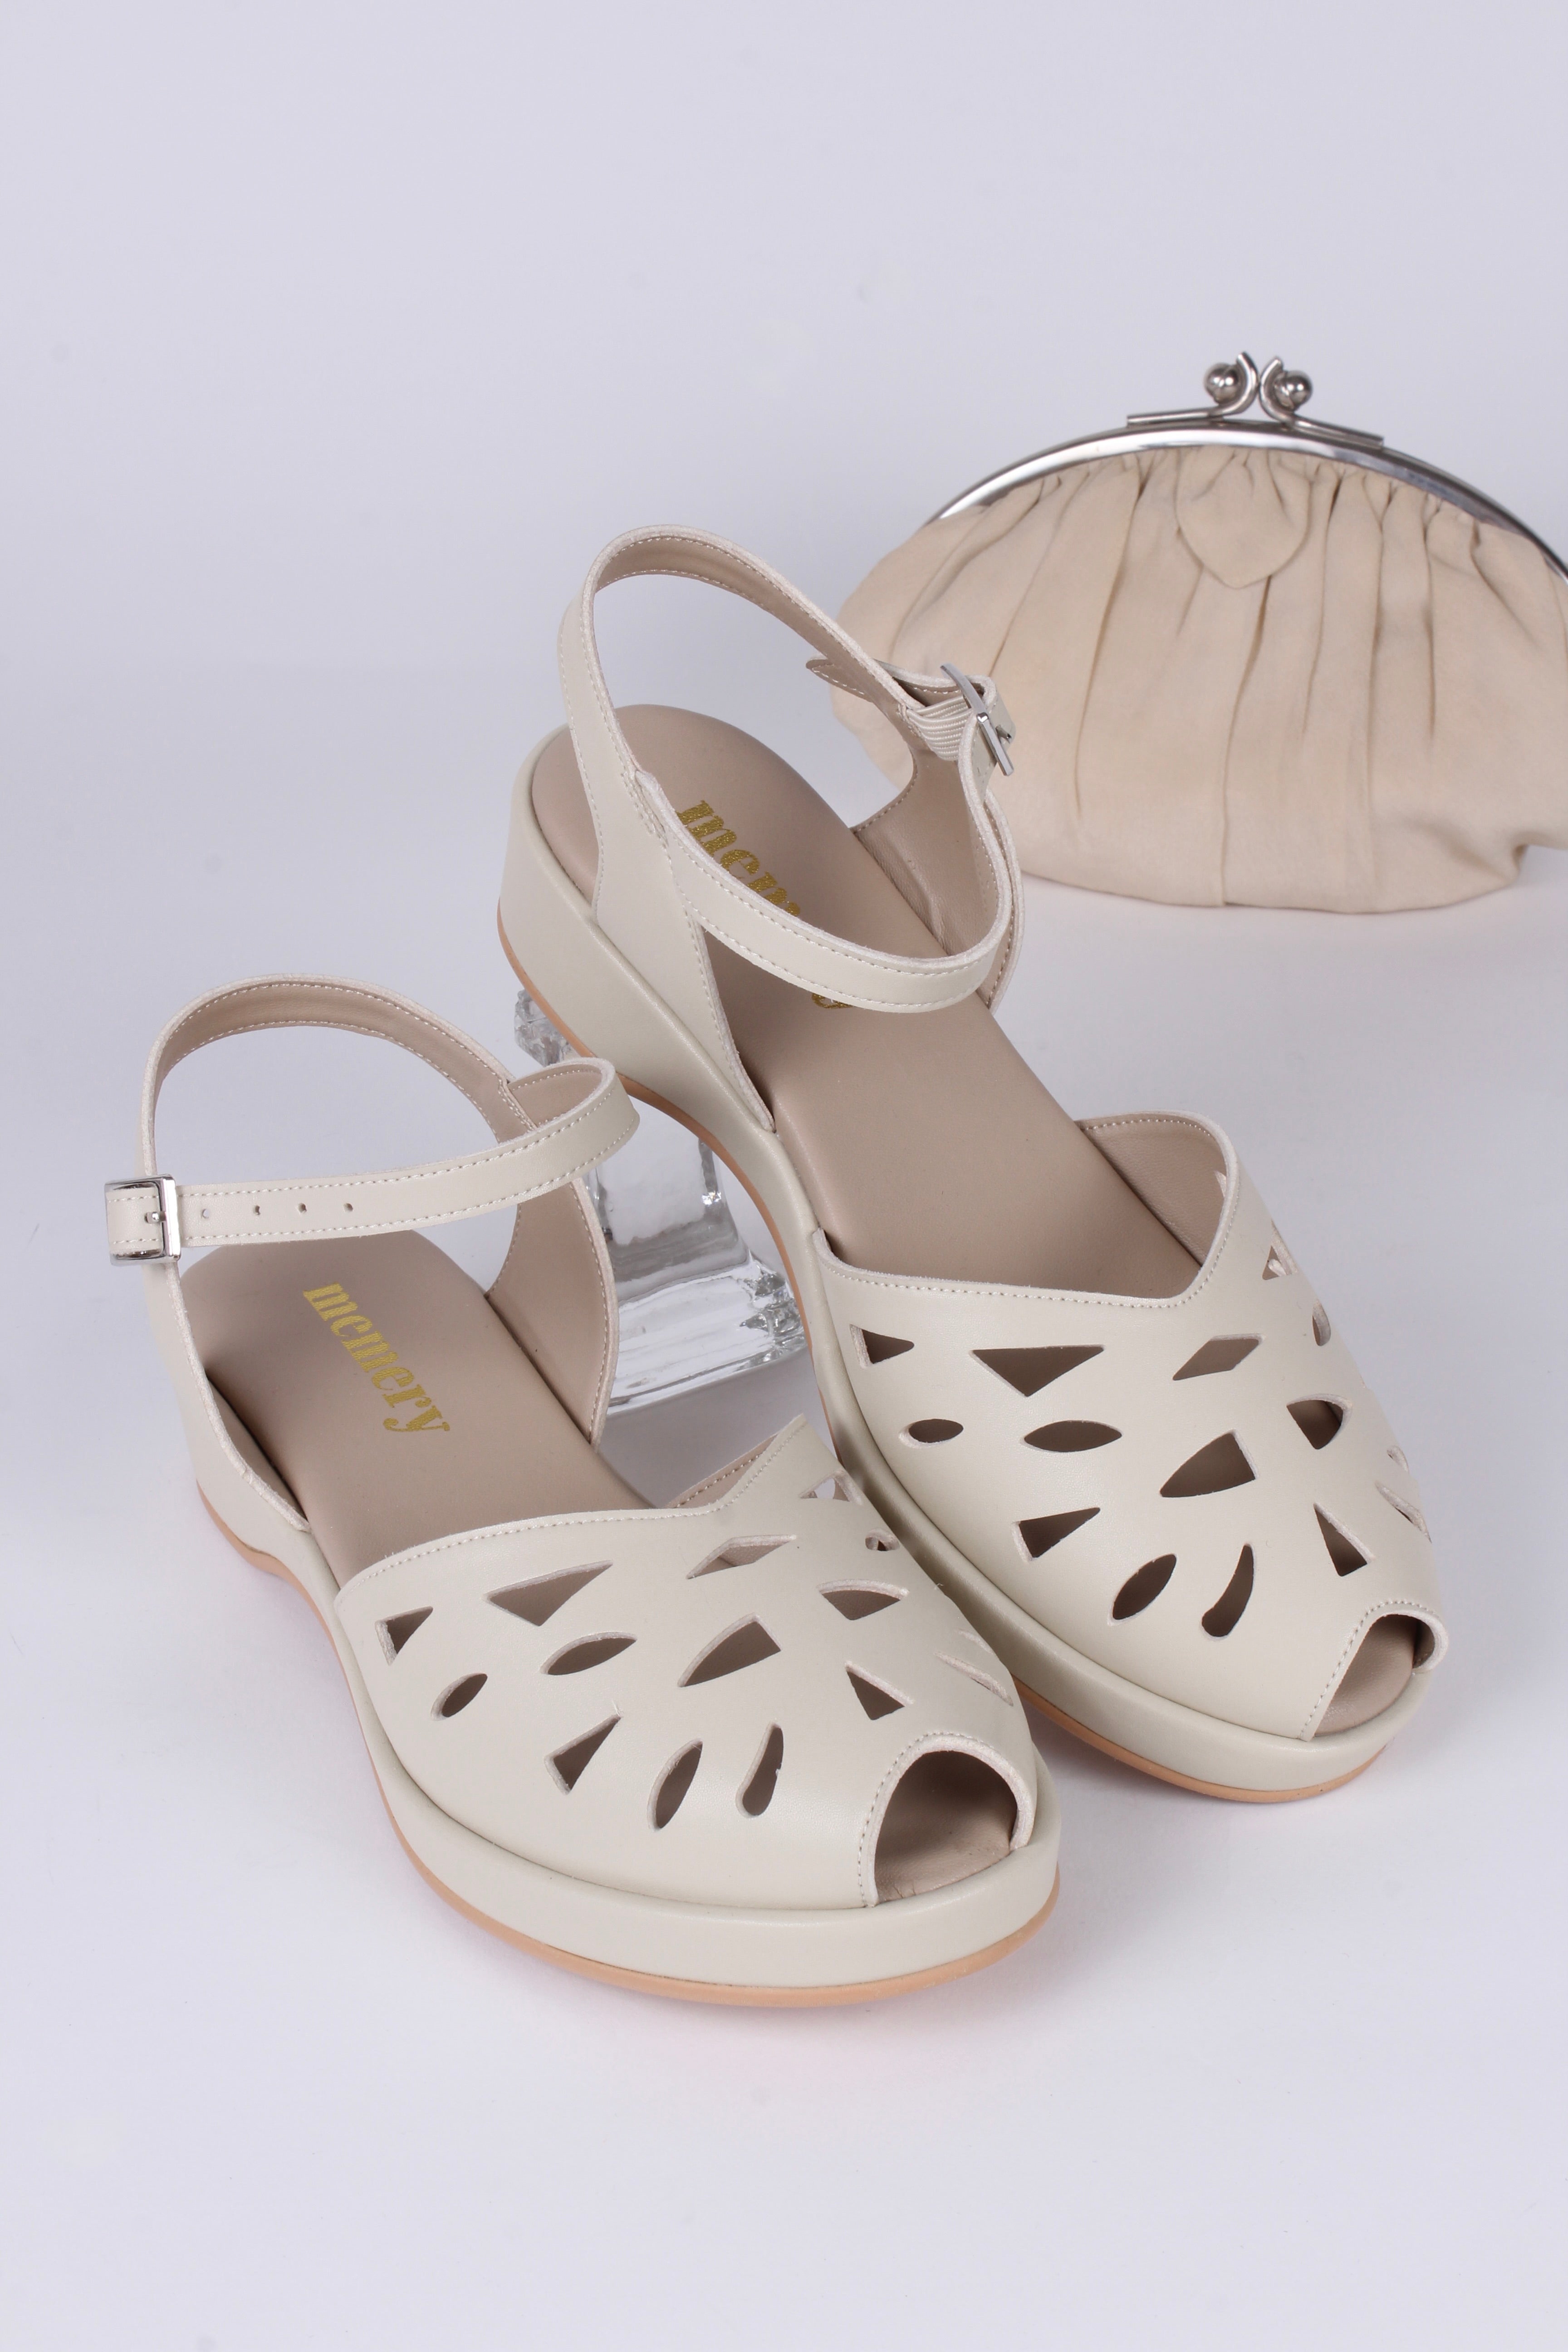 VEGAN - 40'er / 50'er style sandal / wedge - Cream - Sidse